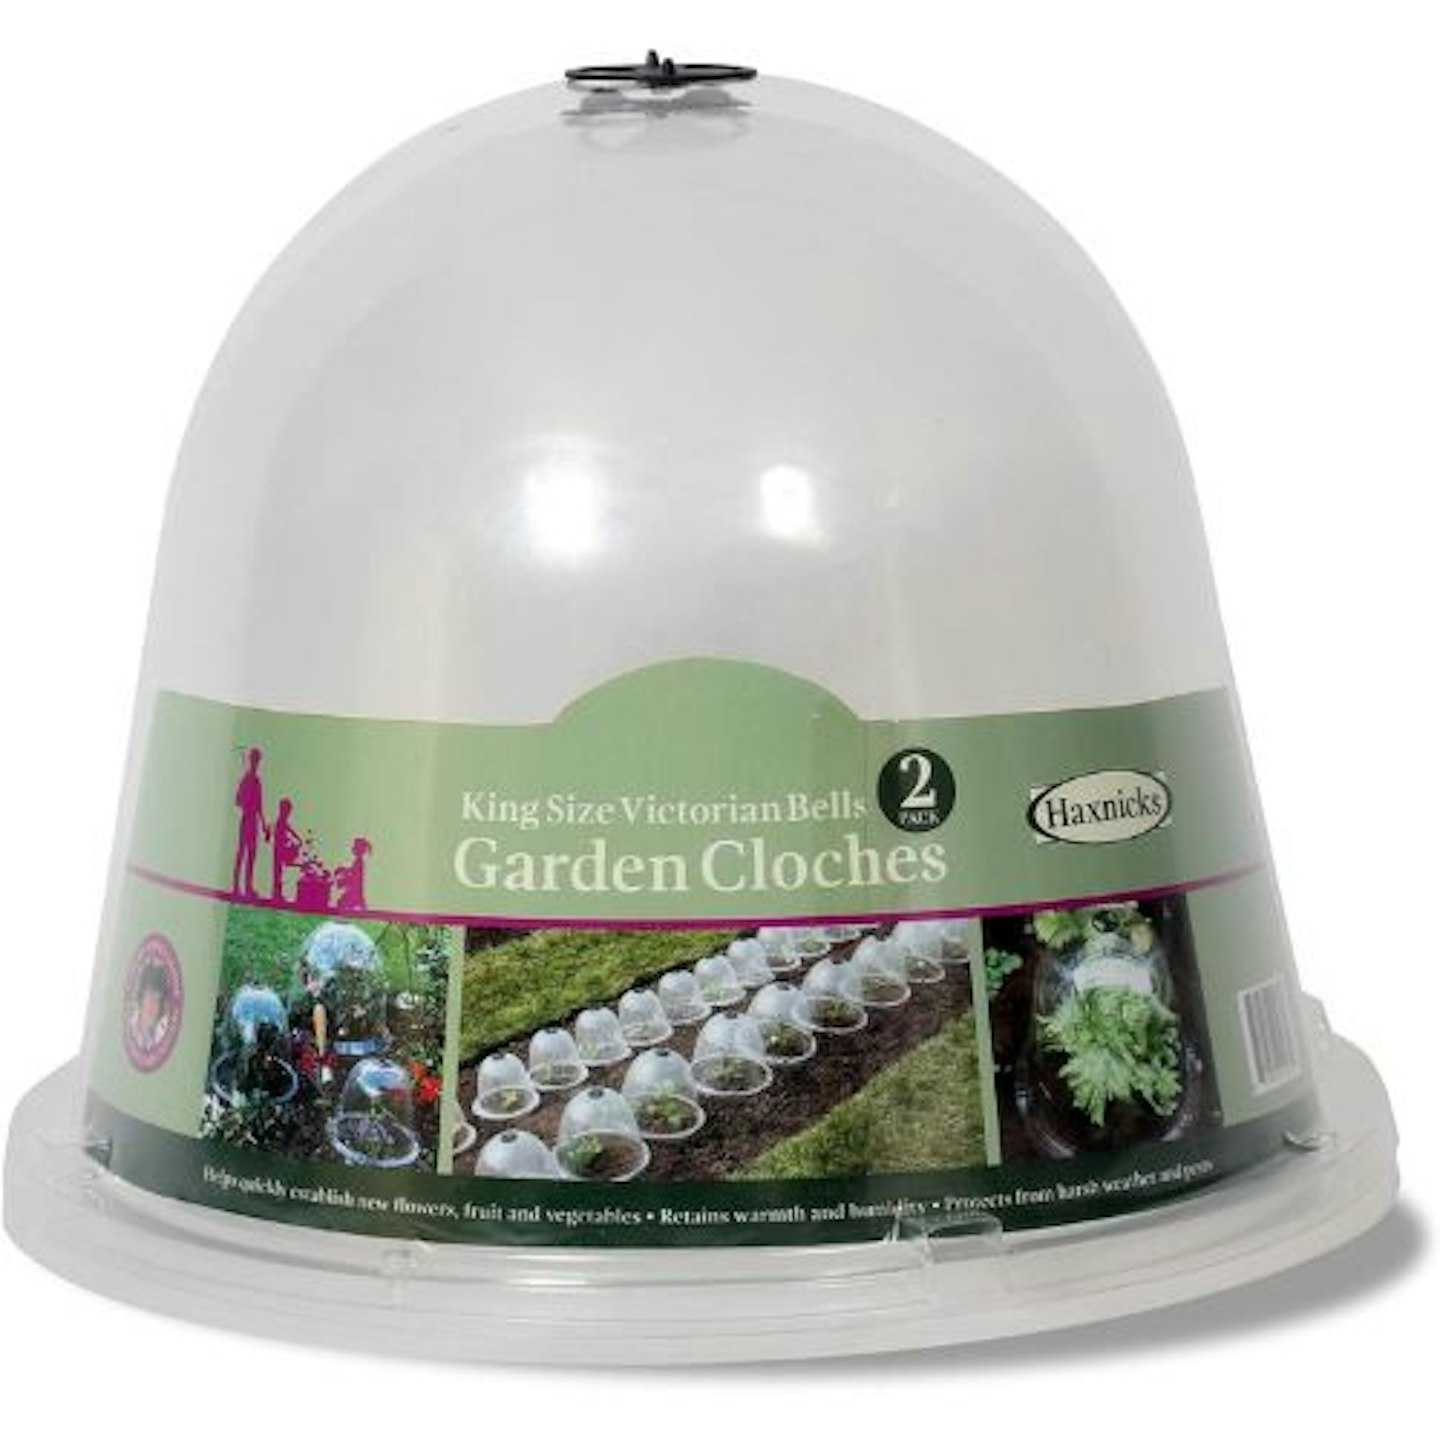 Haxnicks Victorian Bell Garden Cloche Plant Protection